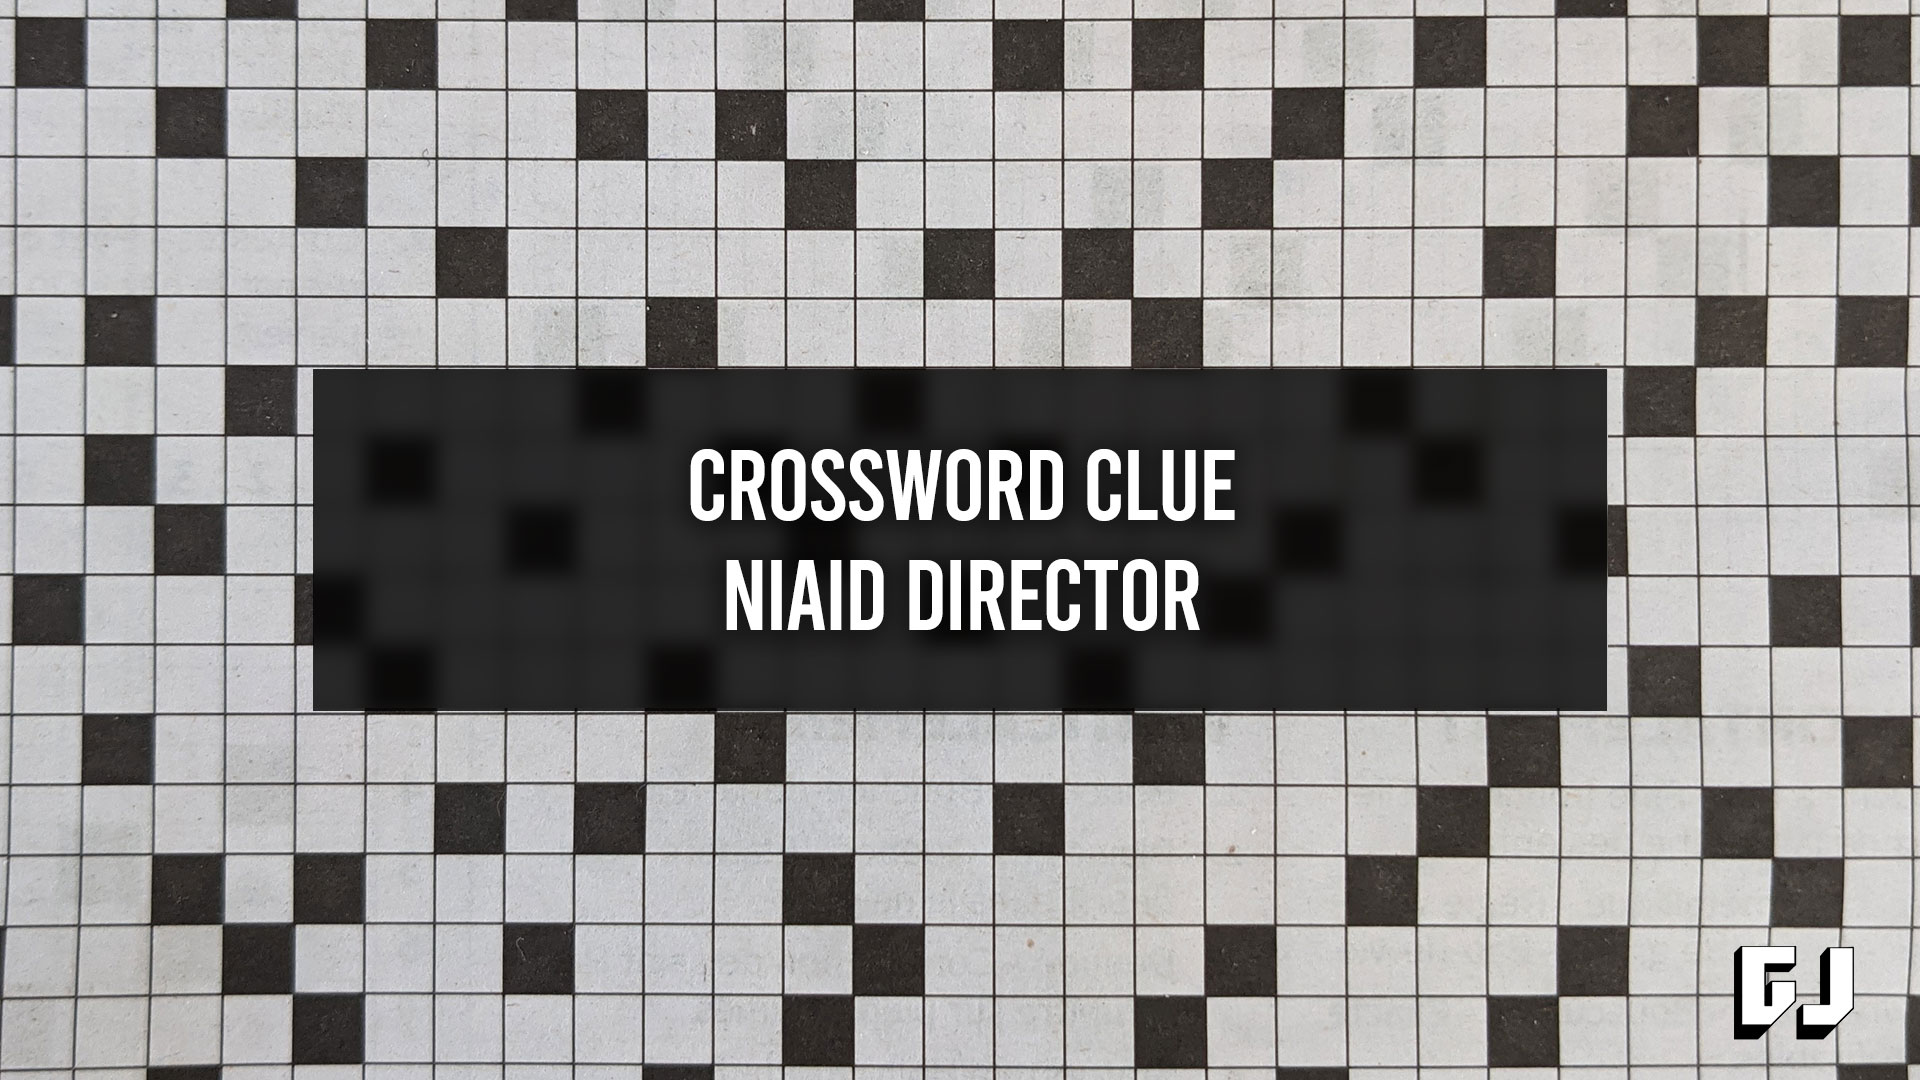 NIAID Director Crossword Clue Gamer Journalist